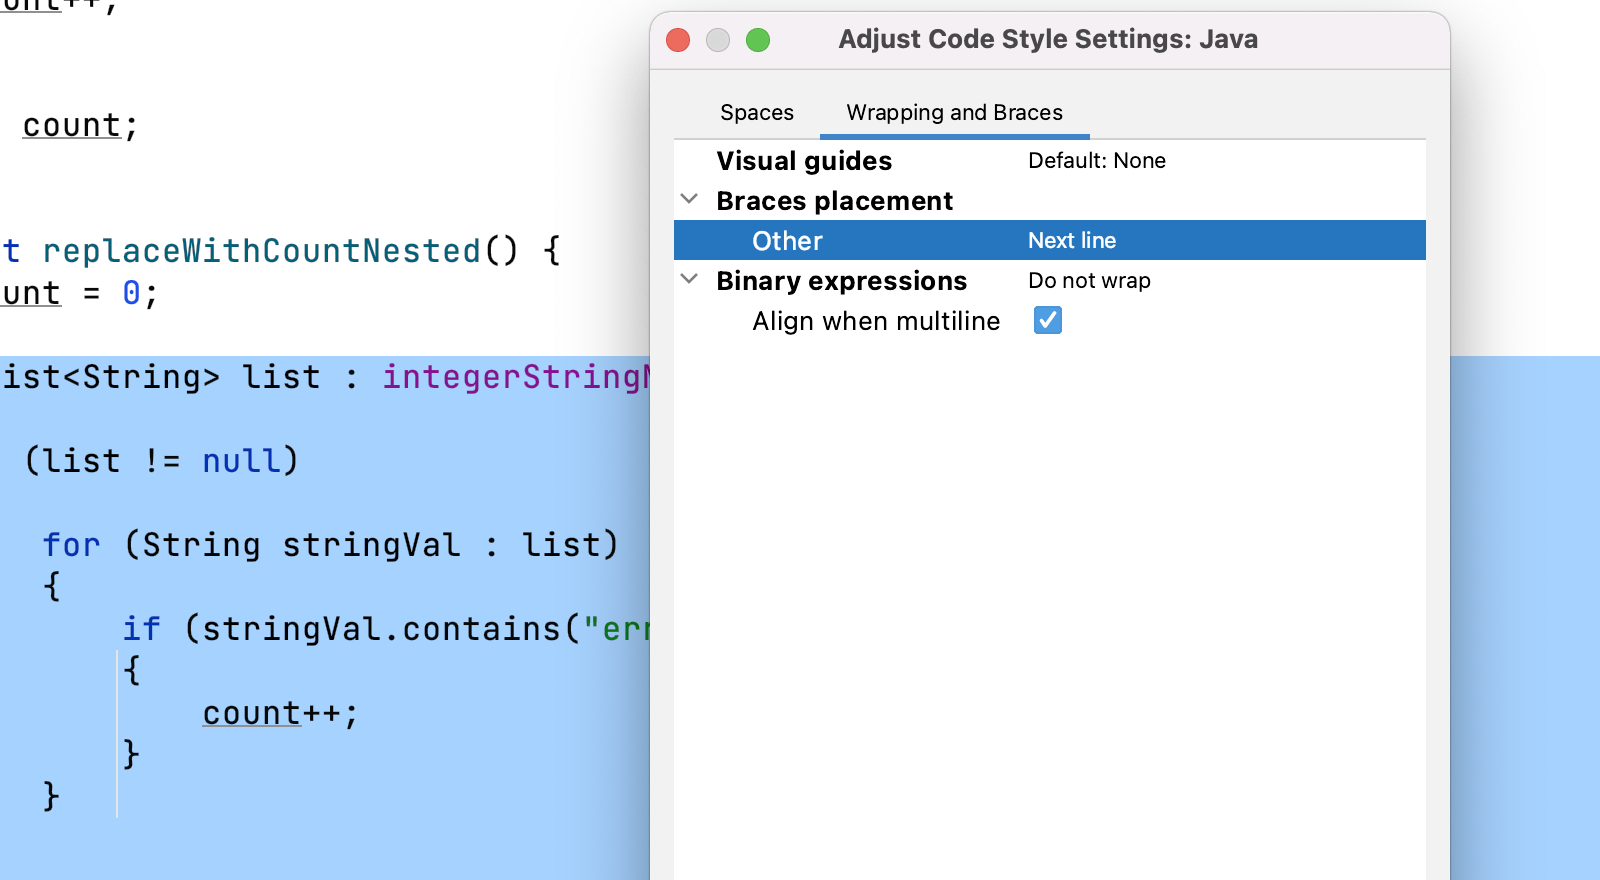 Adjust Code Style